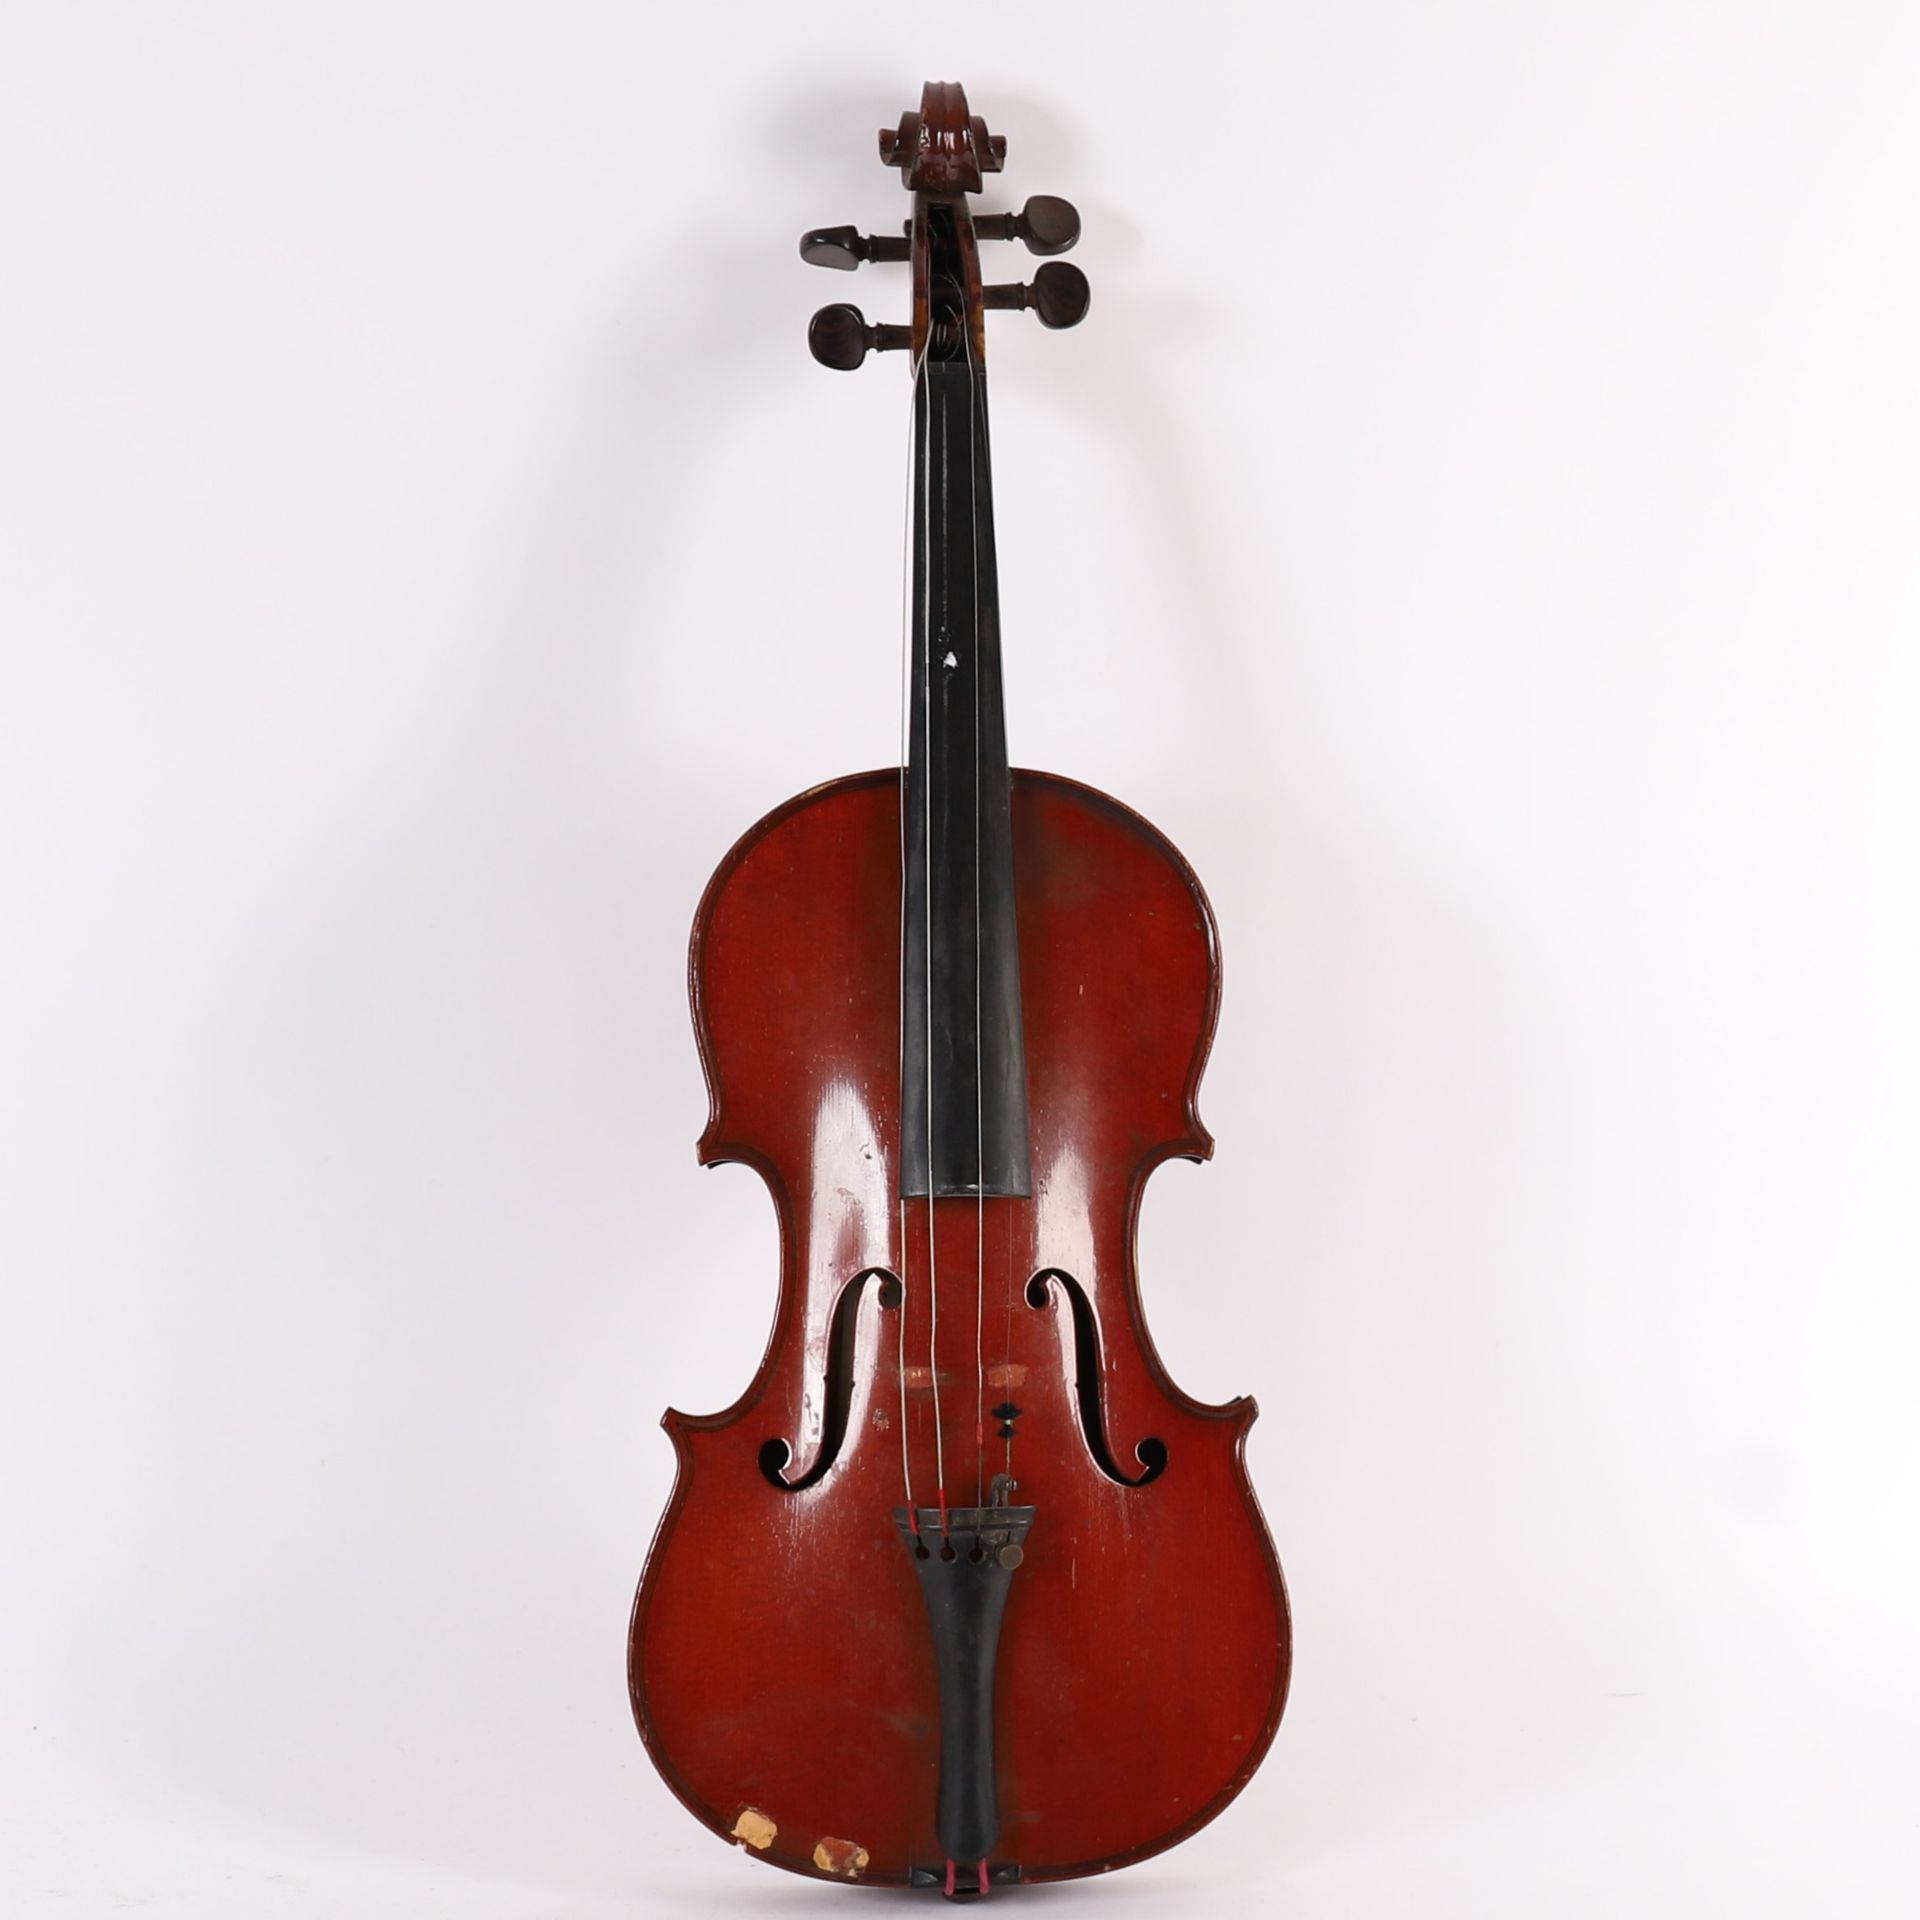 Null 小提琴
米勒库尔小提琴 
带有标签 "F.M. Bertucci et A.Gonzalez / FECERO IN Roma nal 1928"。
&hellip;